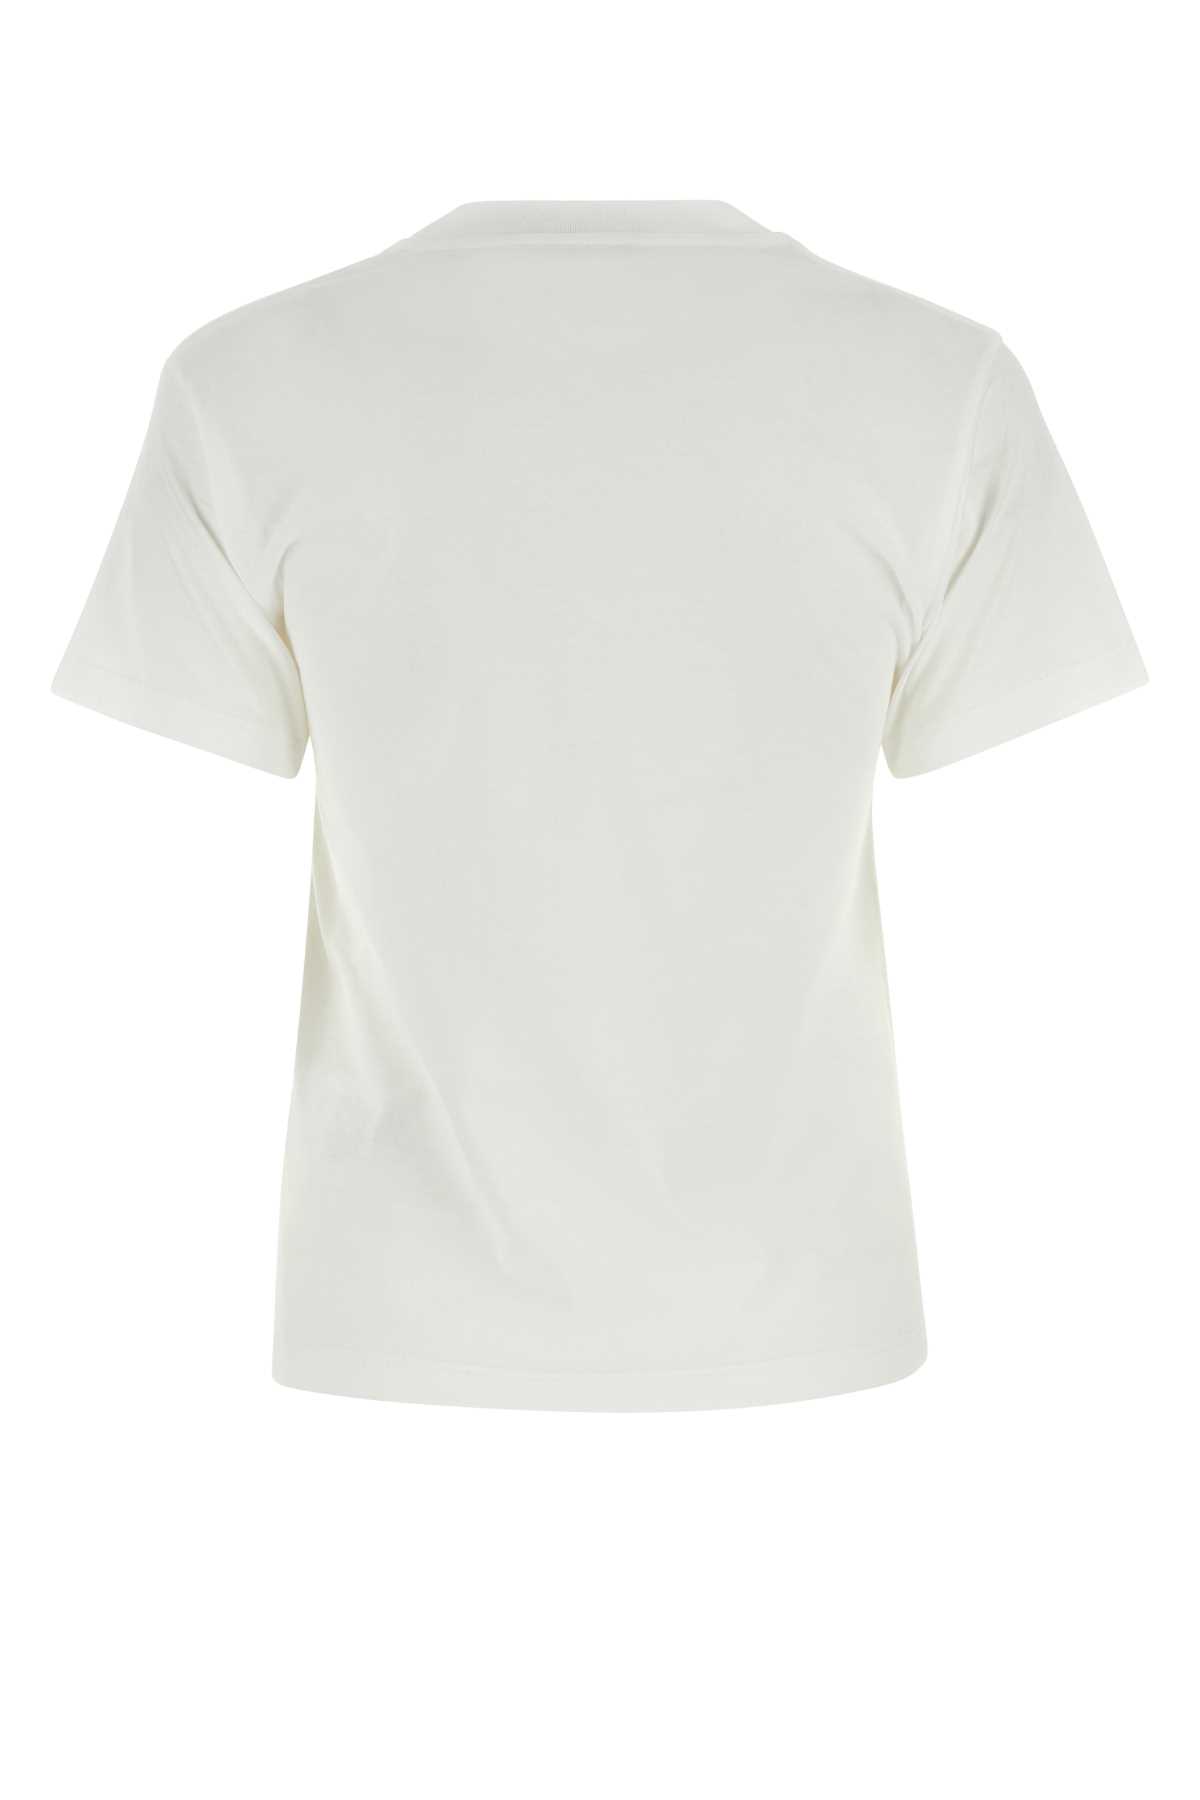 Valentino White Cotton T-shirt In Bianco